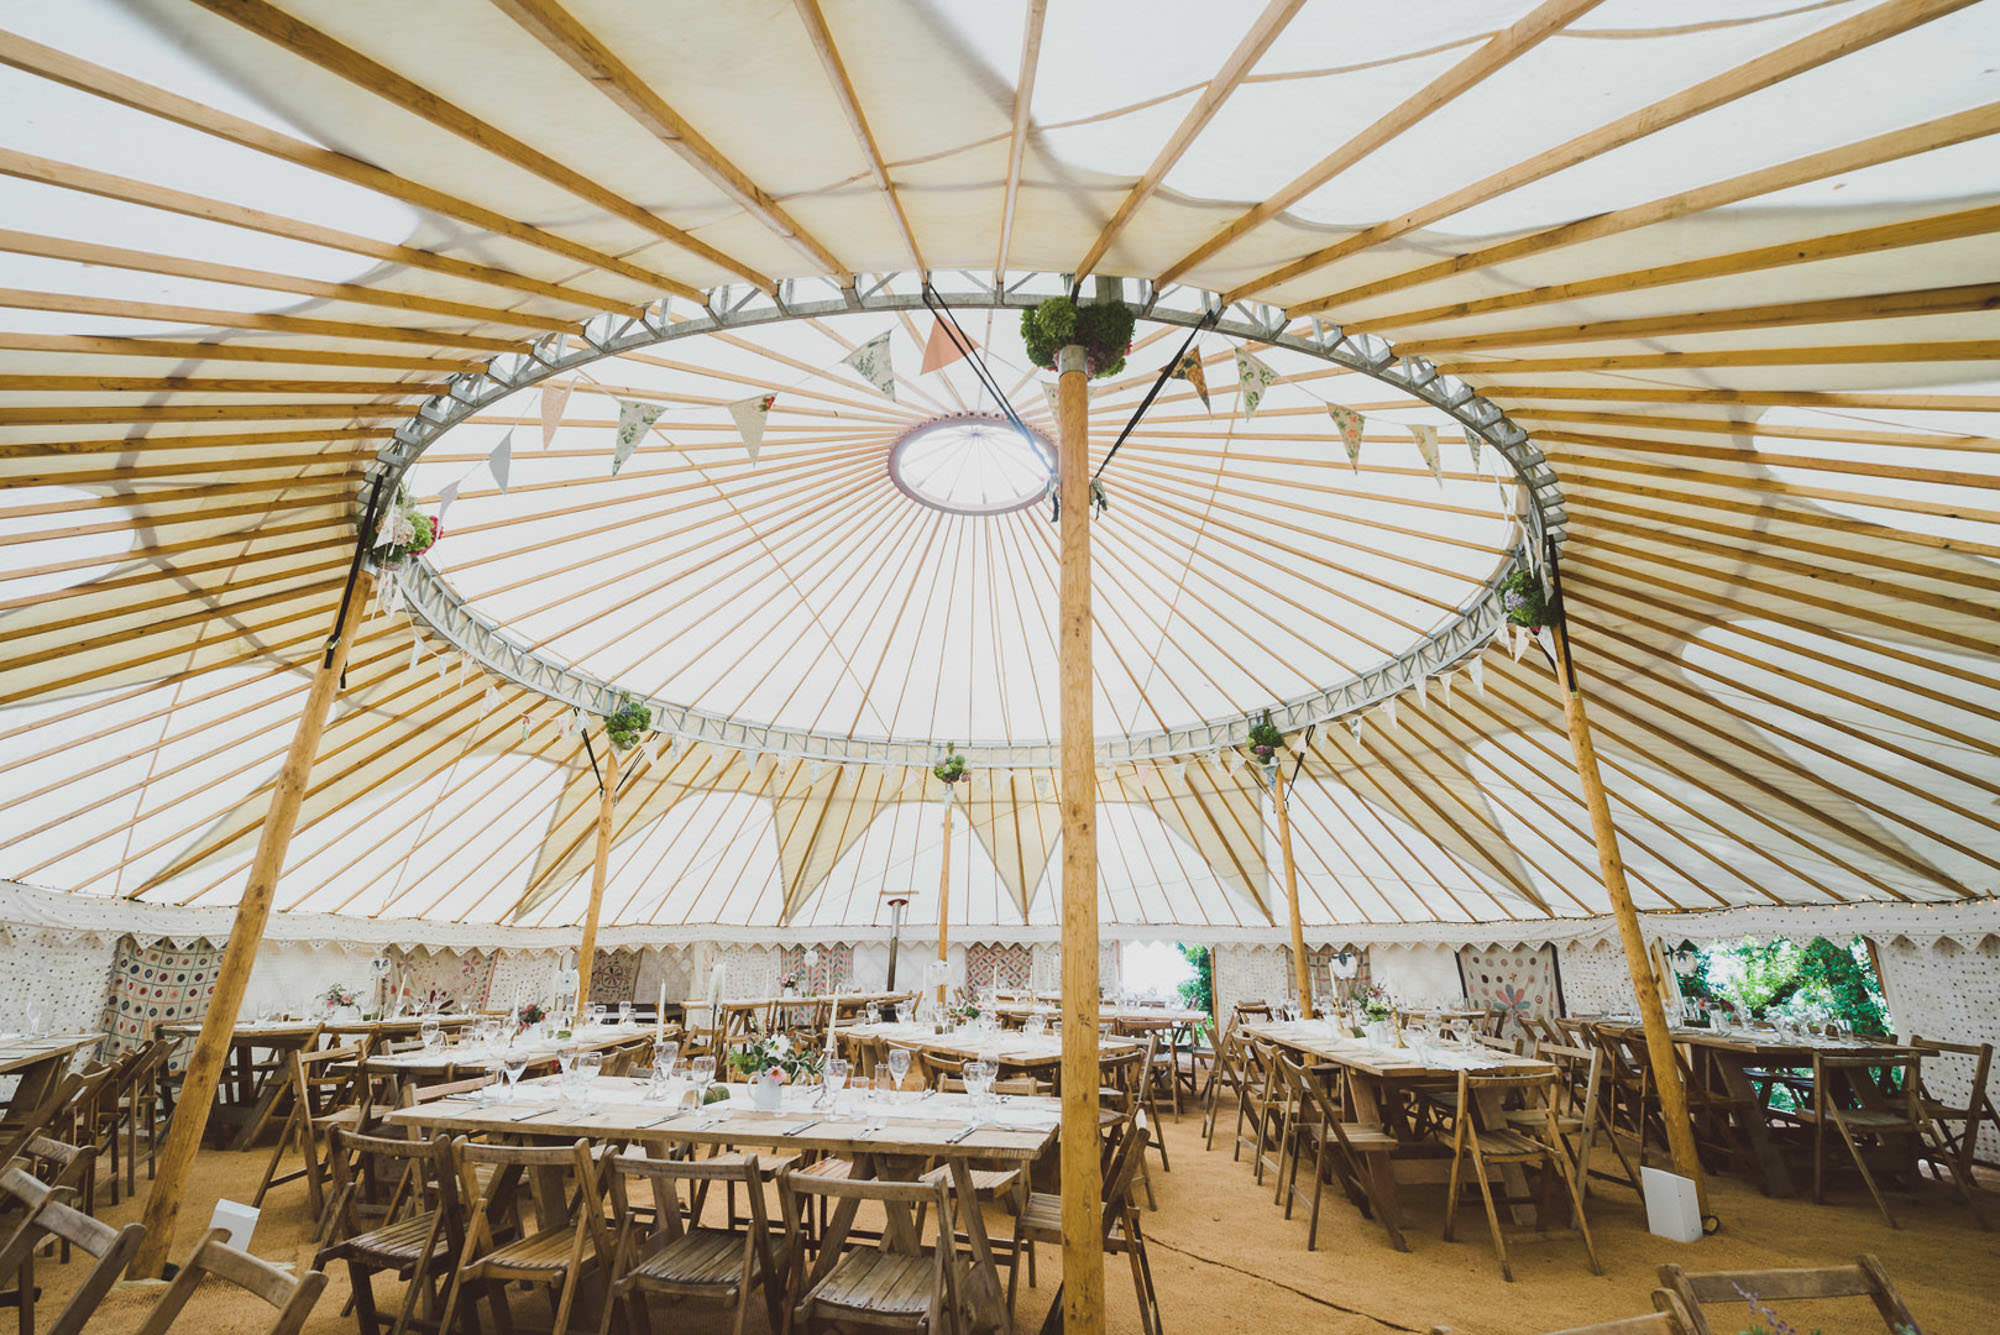 stunning wedding yurts or hire